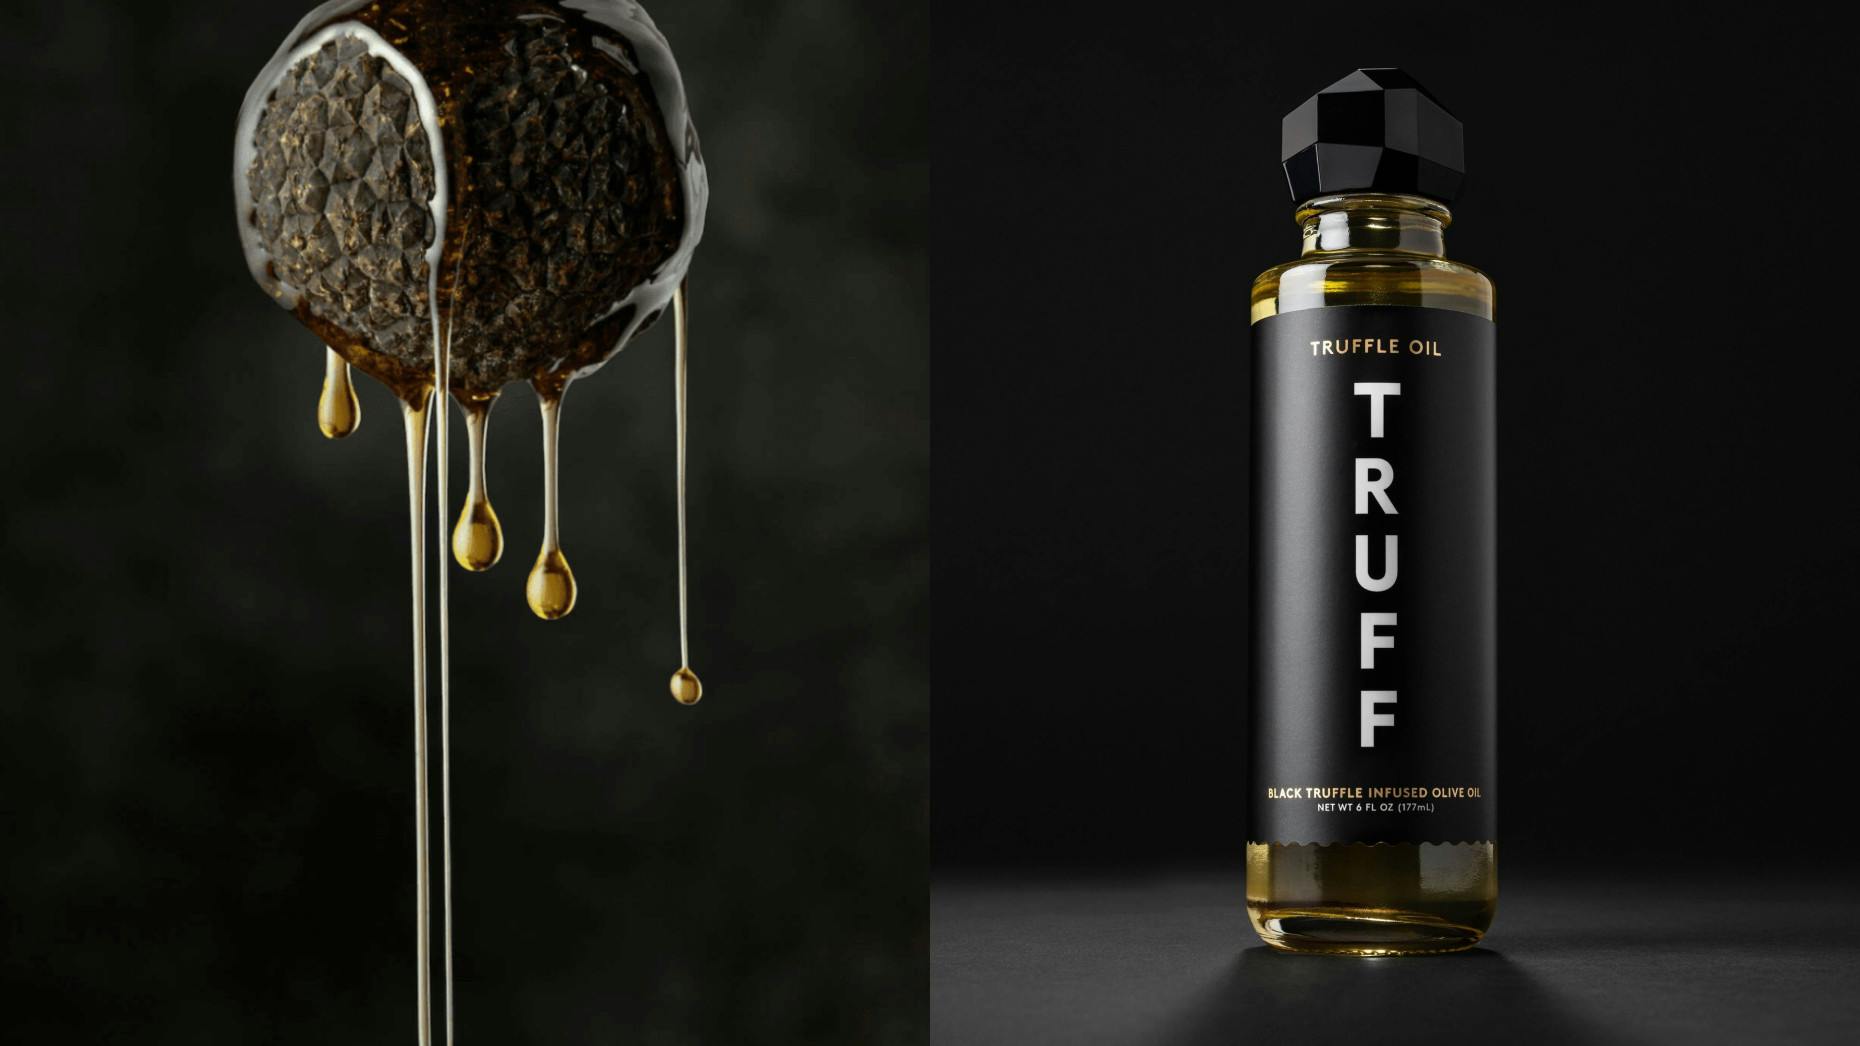 A black truffle oil